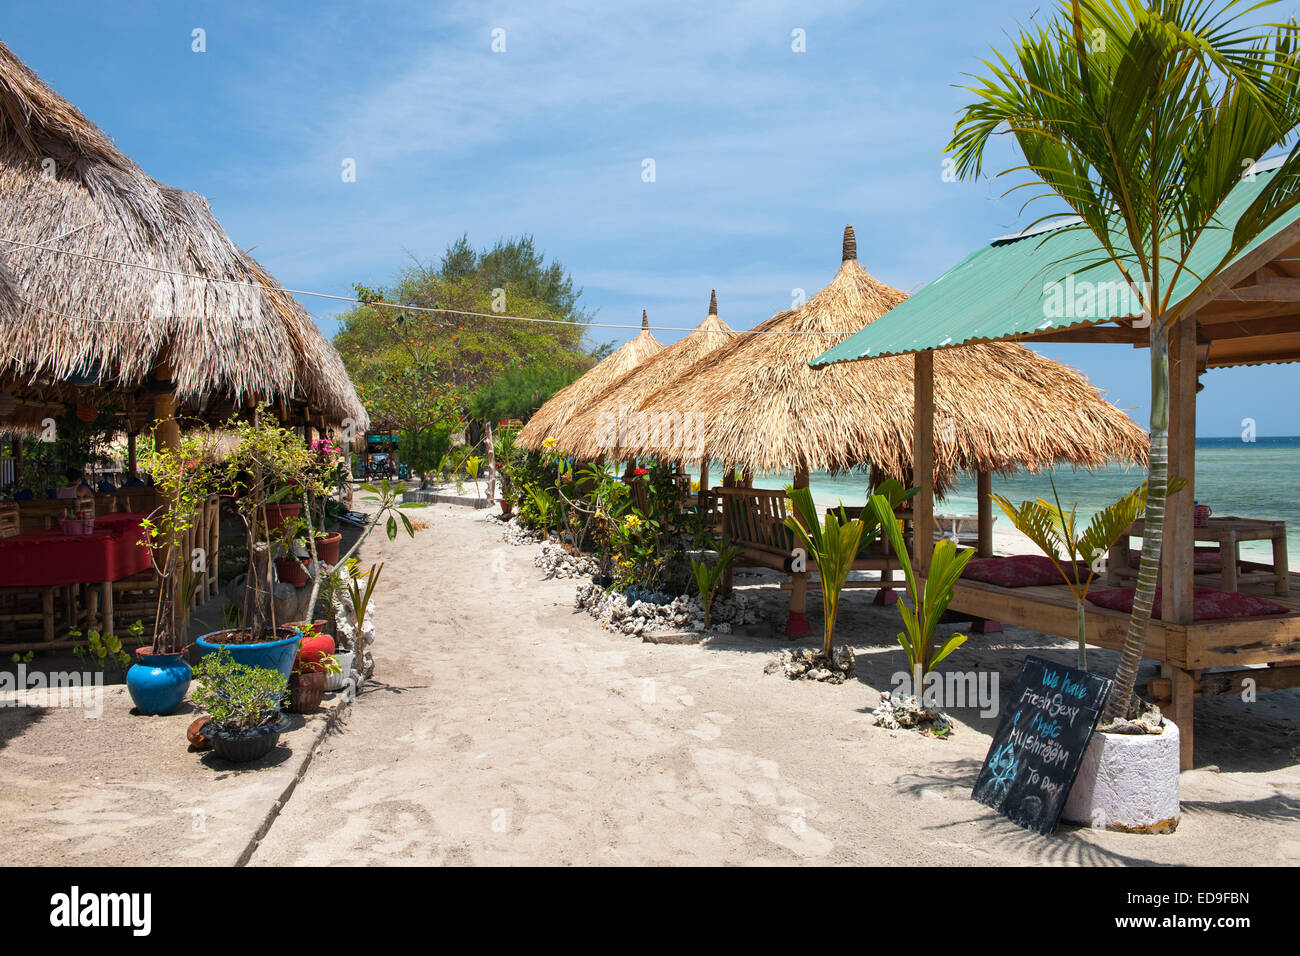 Beach loungers on Gili Air island, Indonesia. Stock Photo